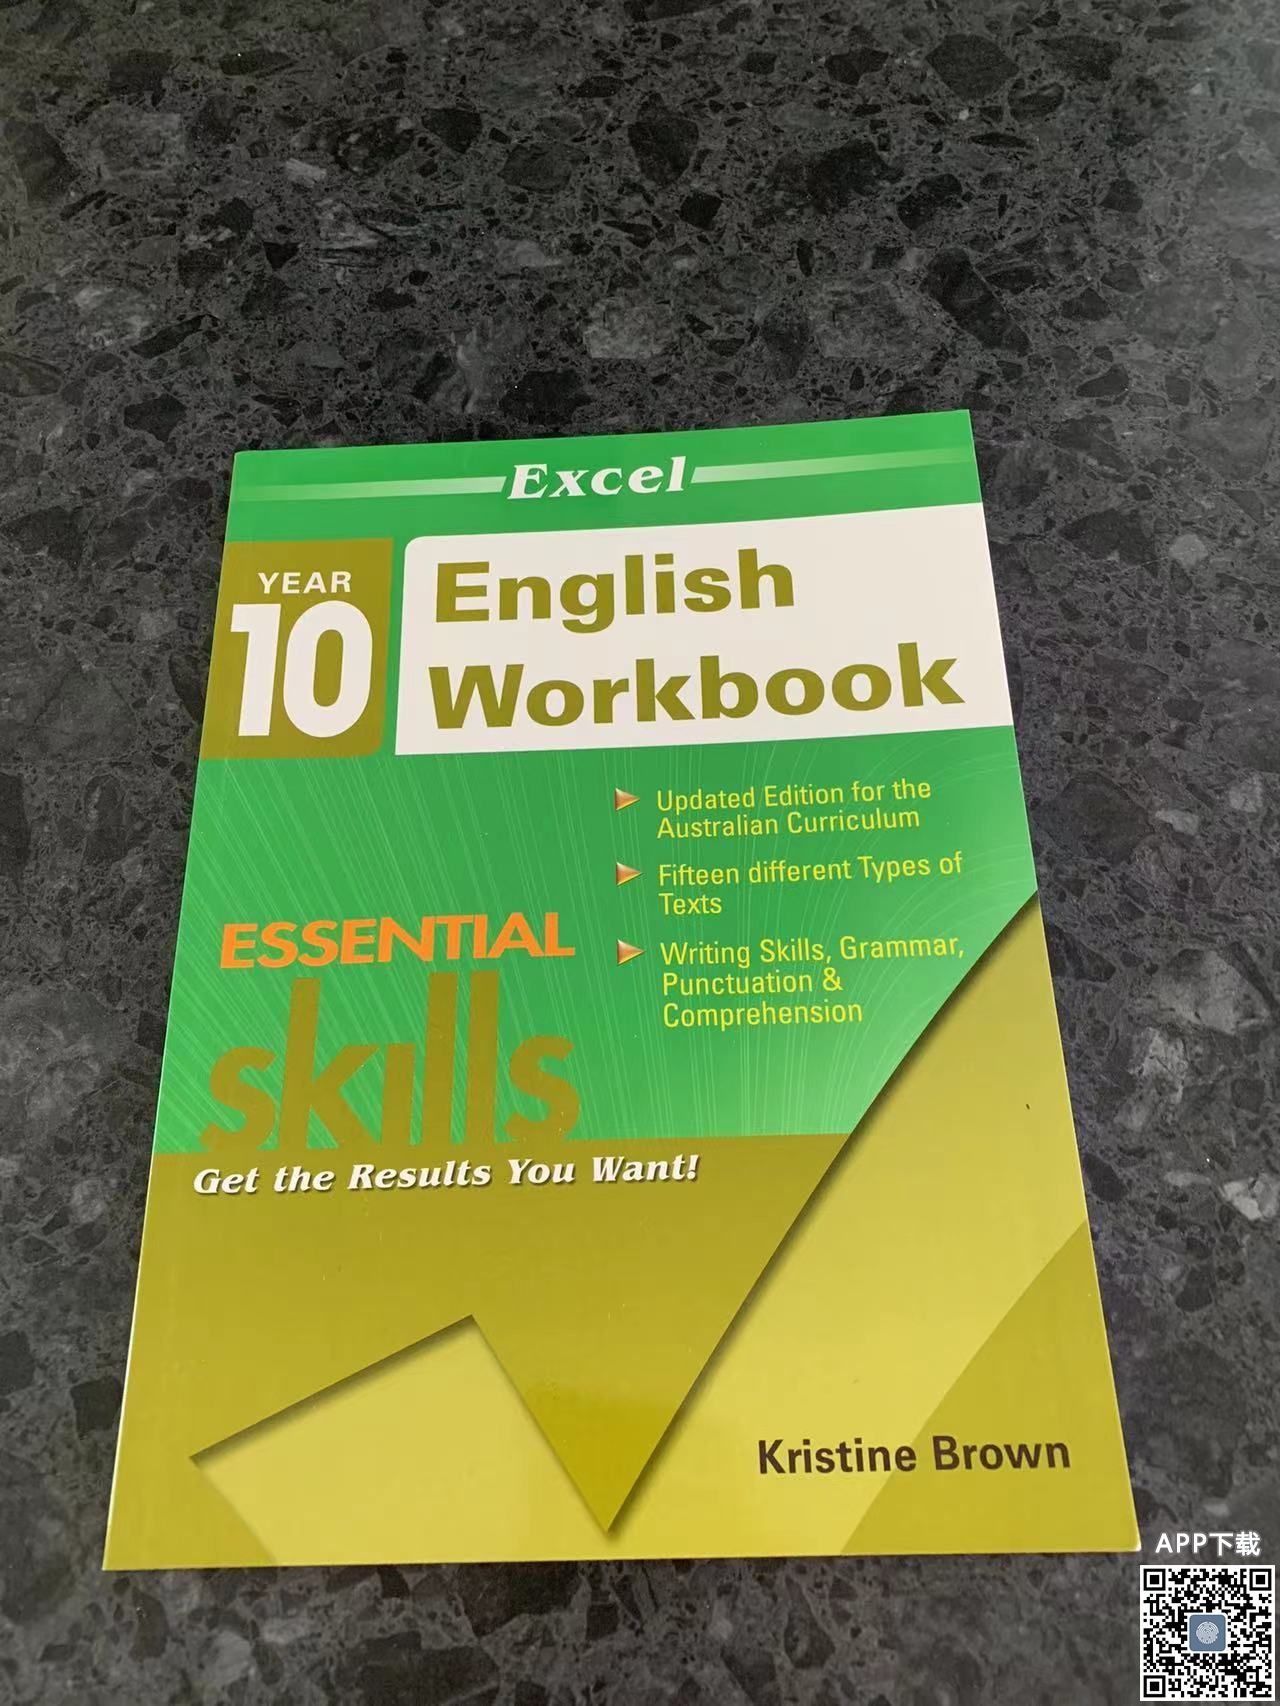 IB English Workbook.jpg